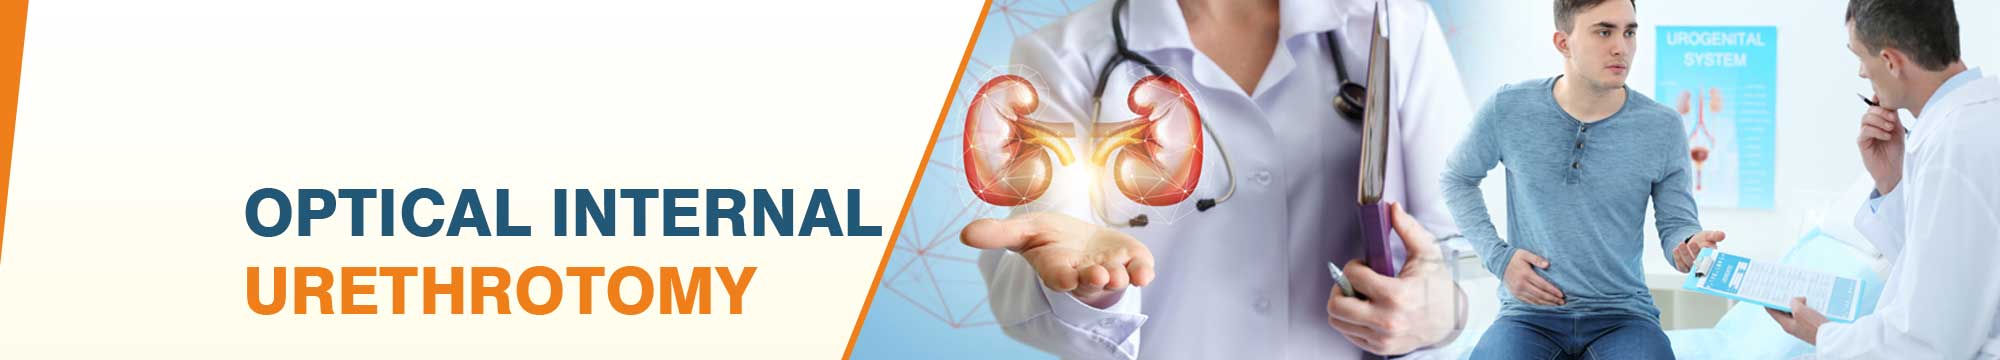 OIU - Optical Internal Urethrotomy in India